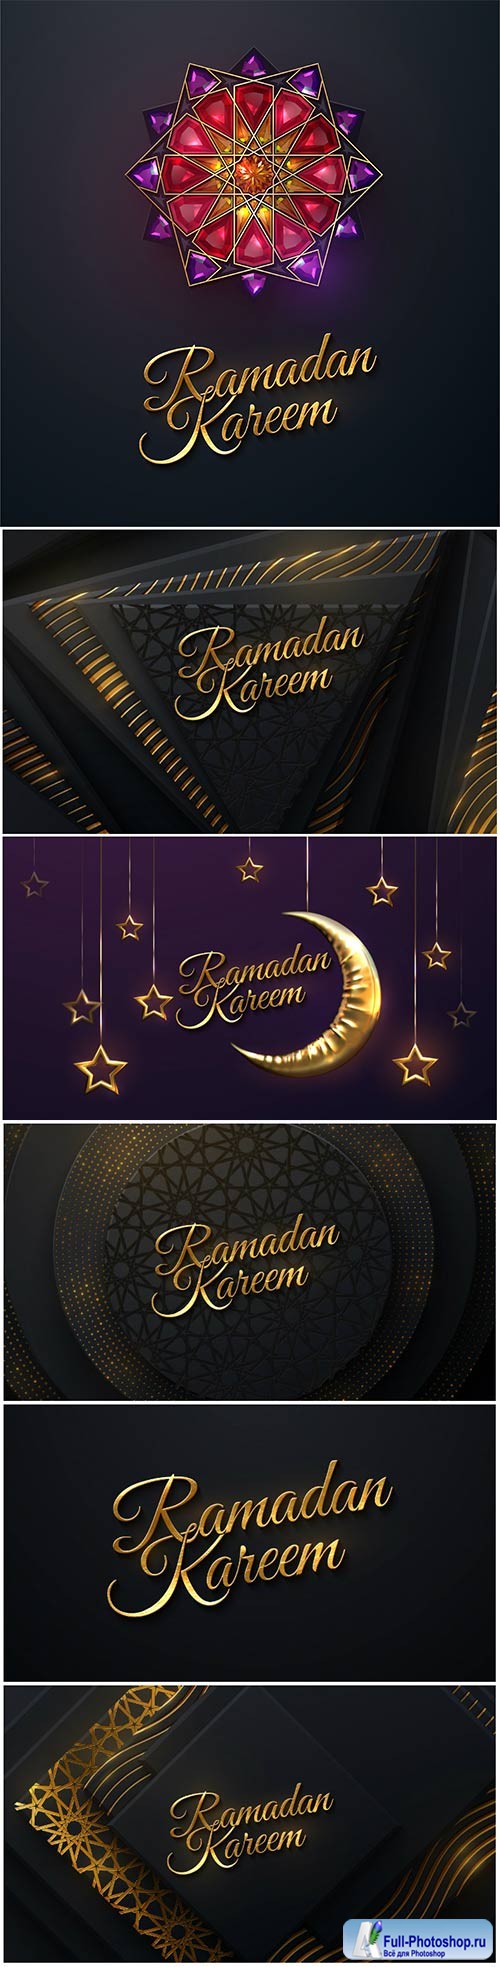 Ramadan kareem, islam religious vectior illustration